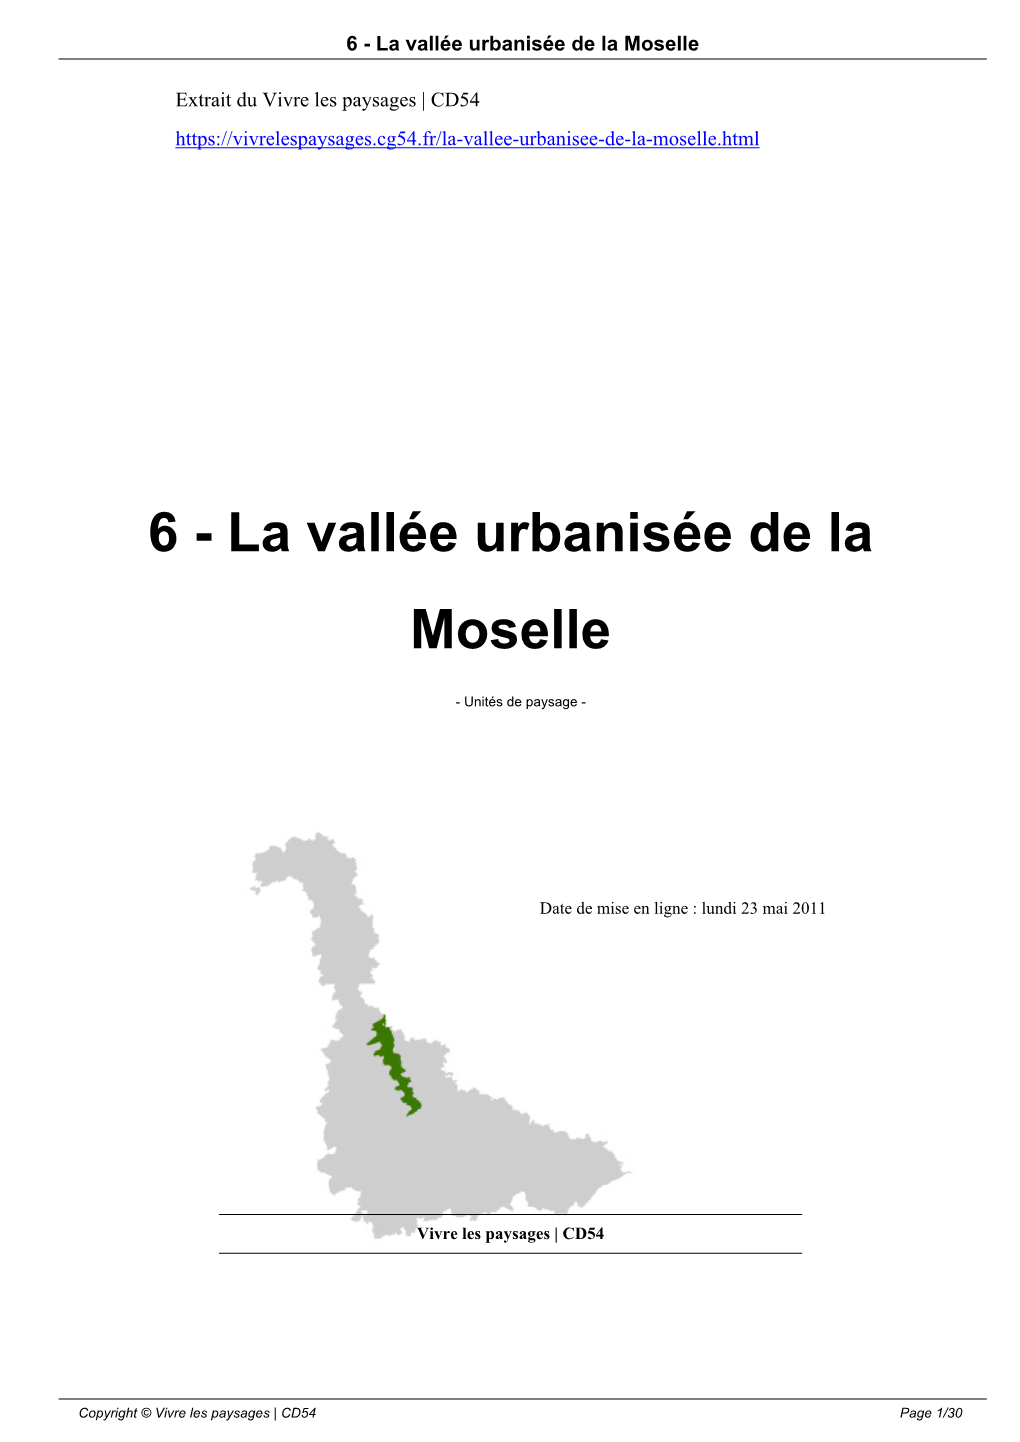 6 - La Vallée Urbanisée De La Moselle